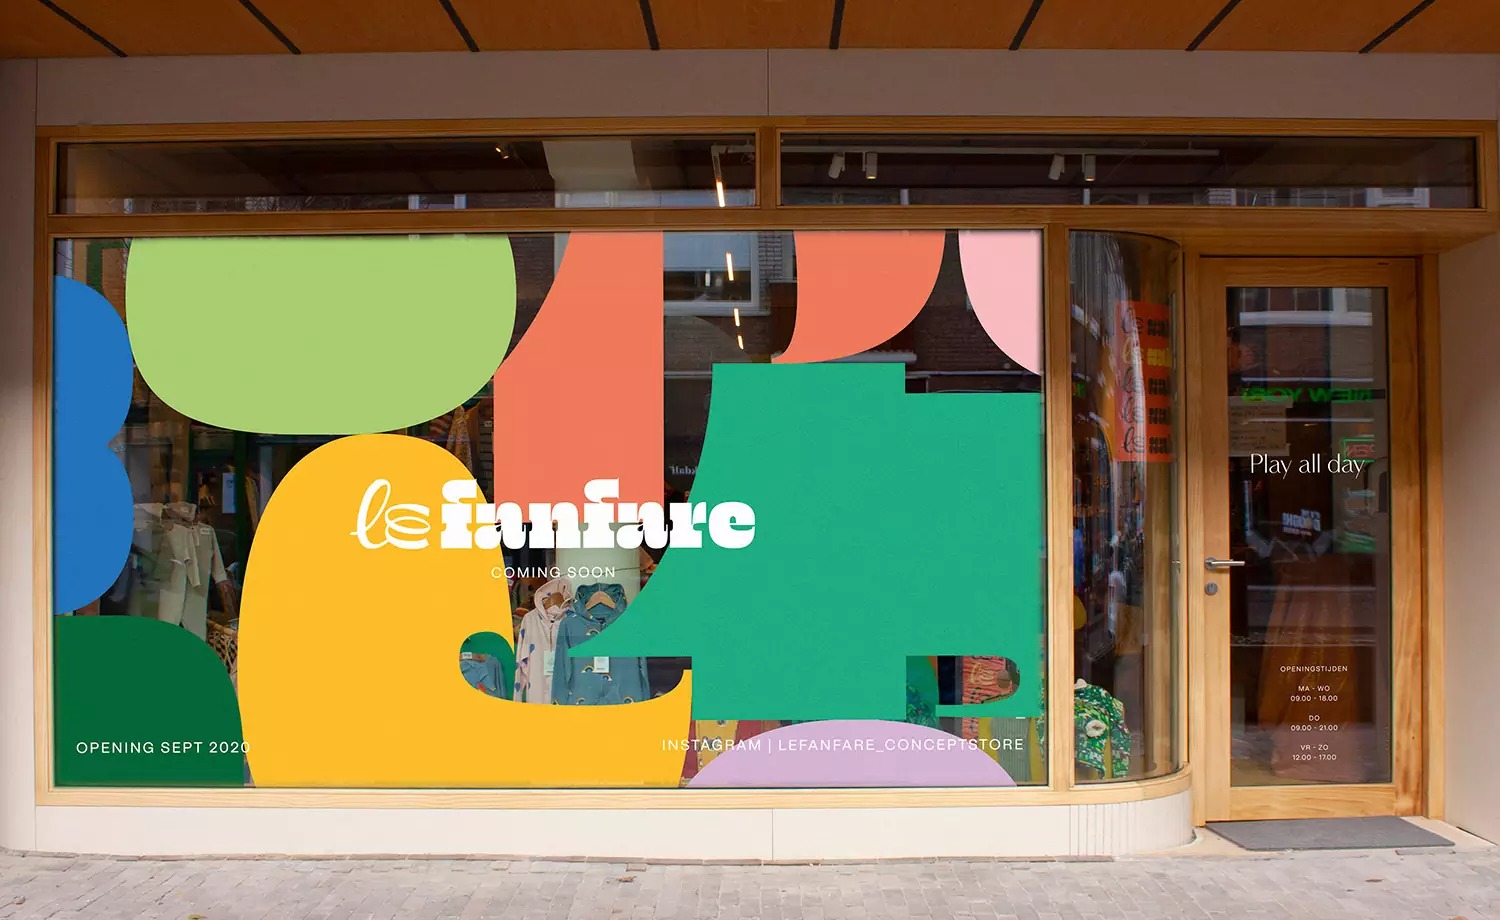 Le Fanfare儿童服装概念店品牌形象设计